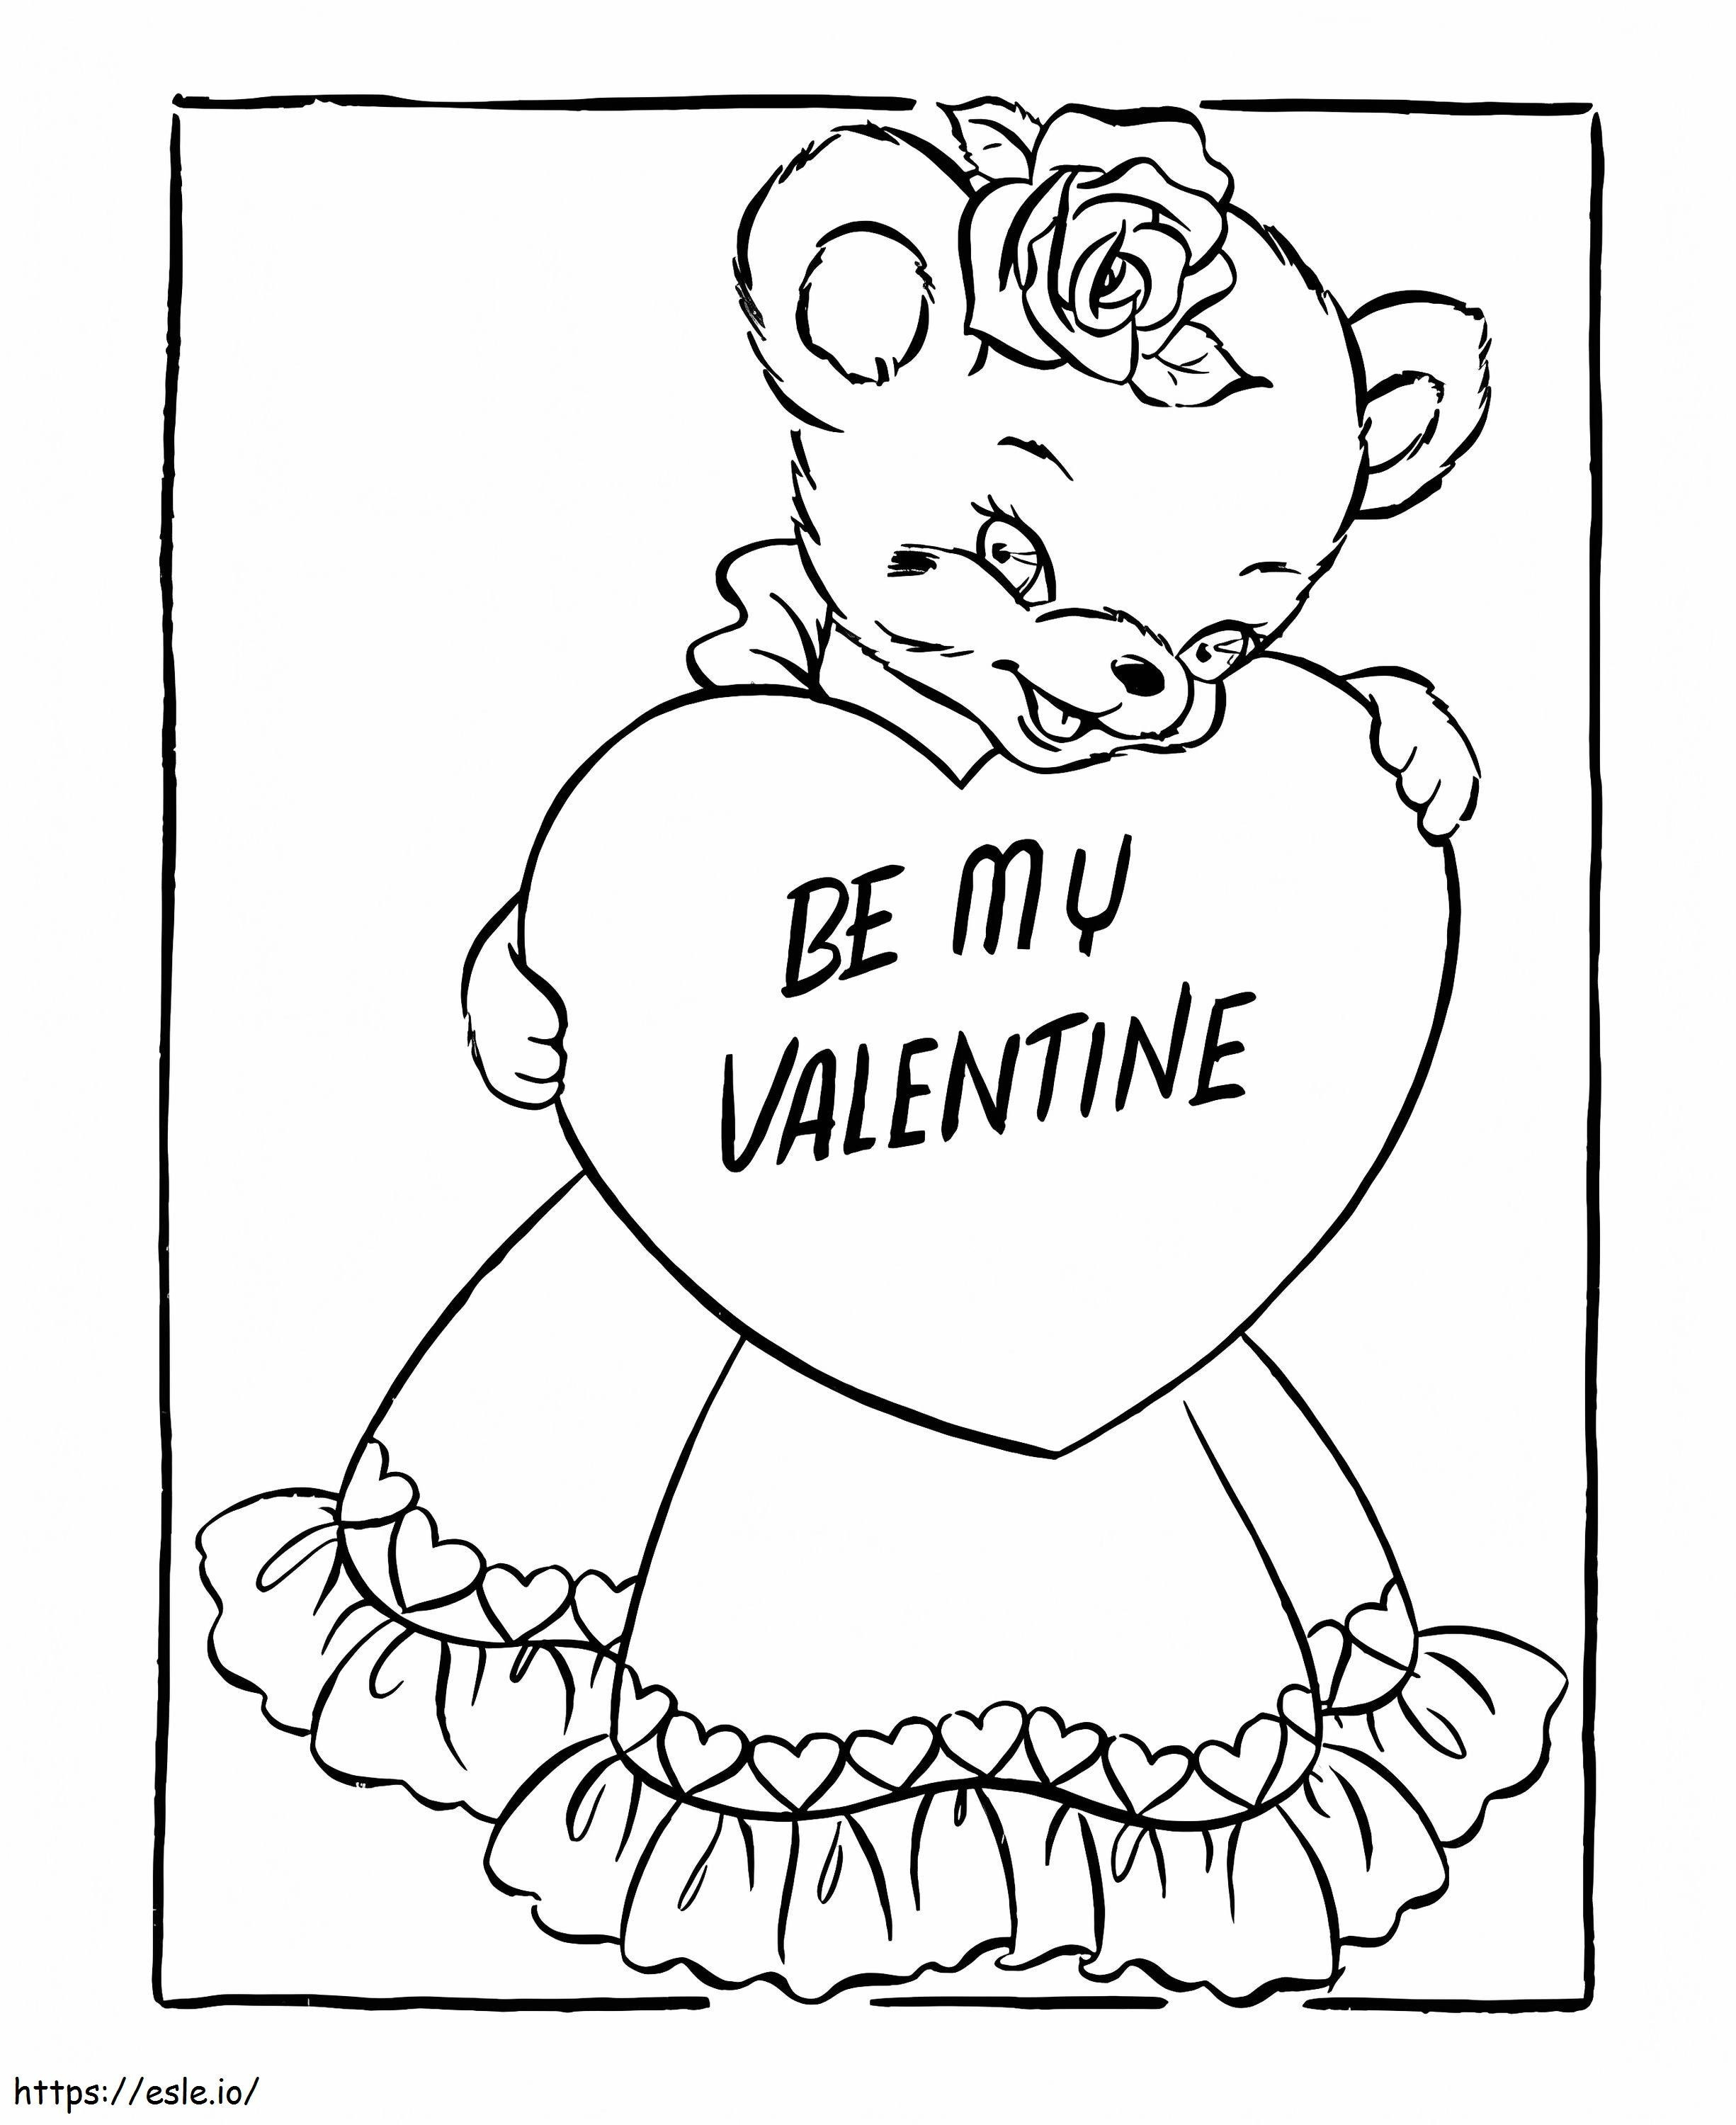 Tarjeta de San Valentín gratis para colorear